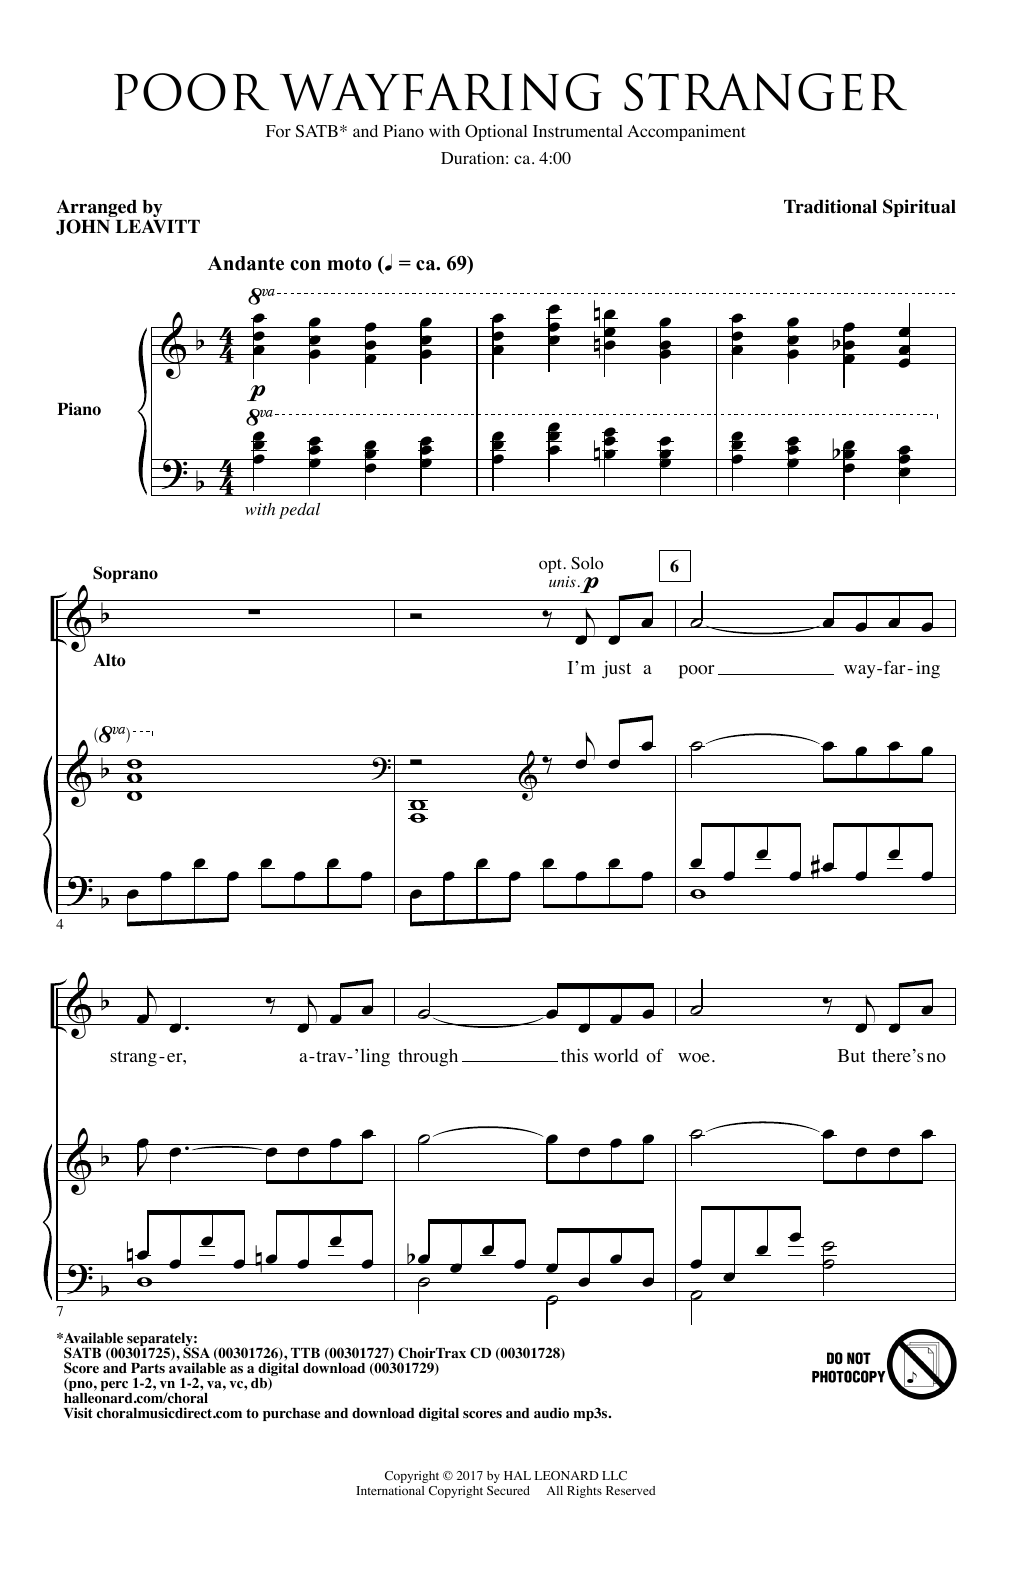 Download Traditional Spiritual Poor Wayfaring Stranger (arr. John Leavitt) Sheet Music and learn how to play SATB Choir PDF digital score in minutes